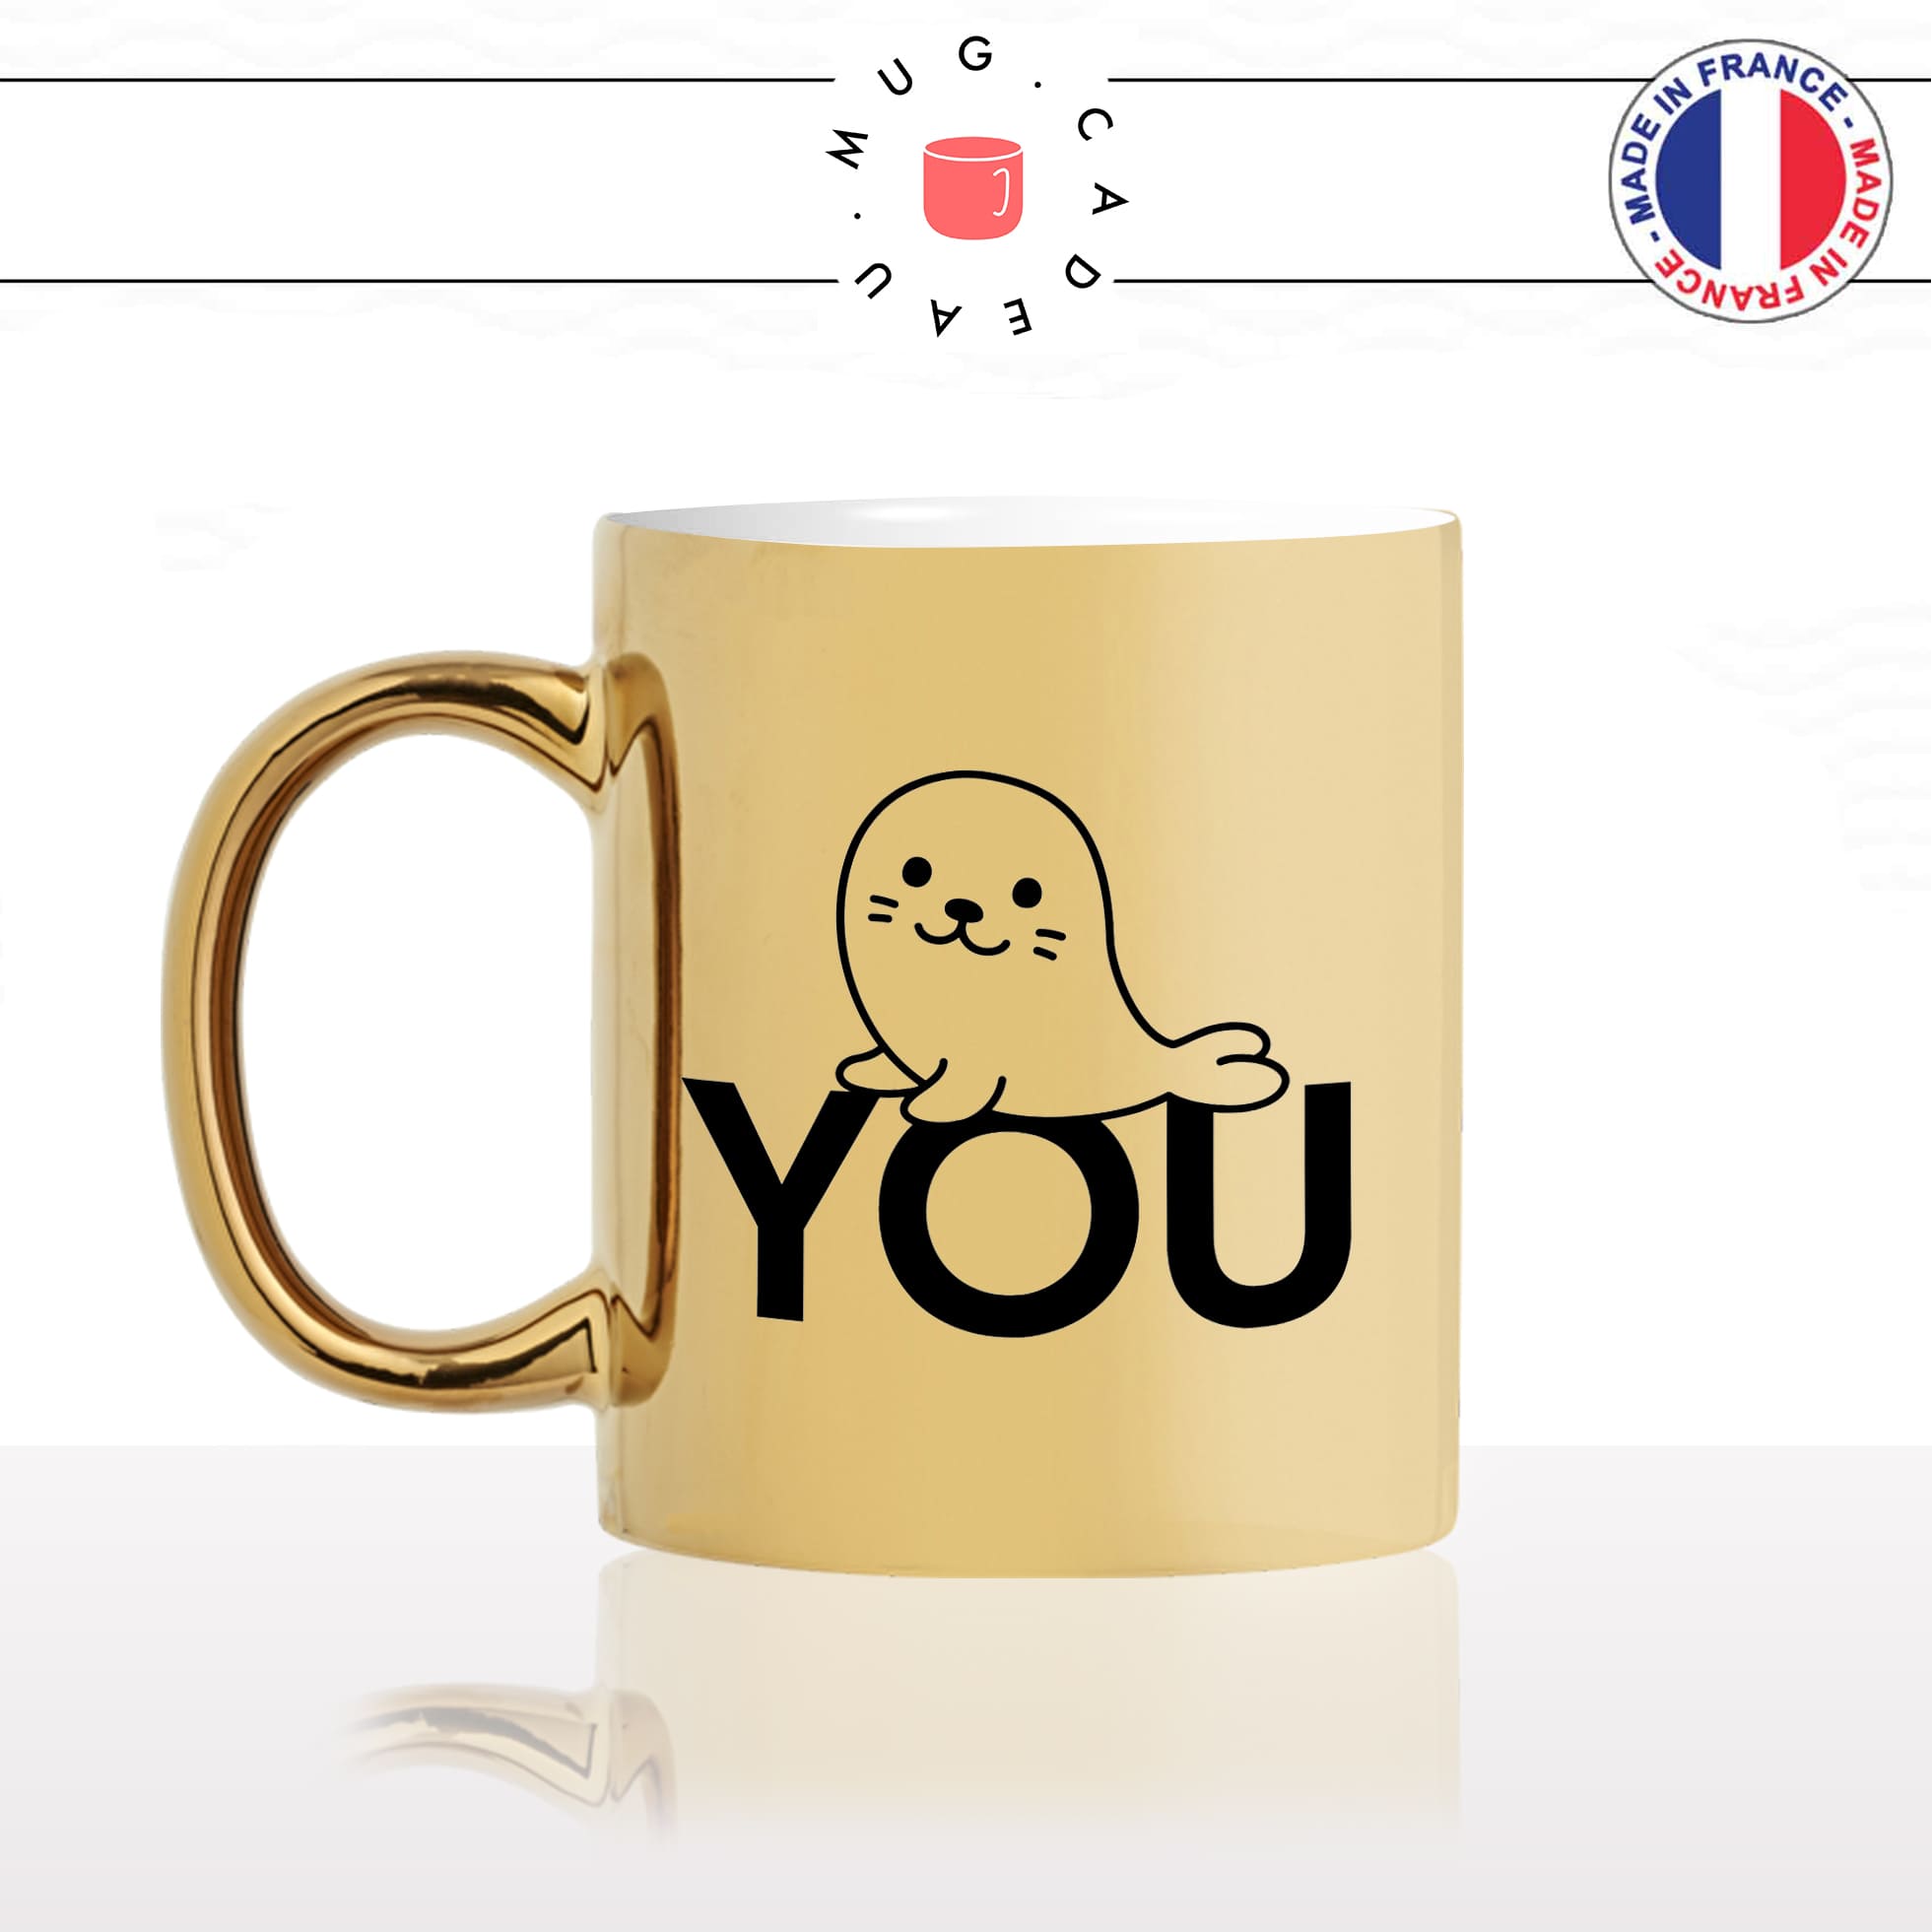 mug-tasse-or-doré-gold-phoque-you-dessin-animal-fuck-u-insulte-mignon-humour-fun-idée-cadeau-originale-cool